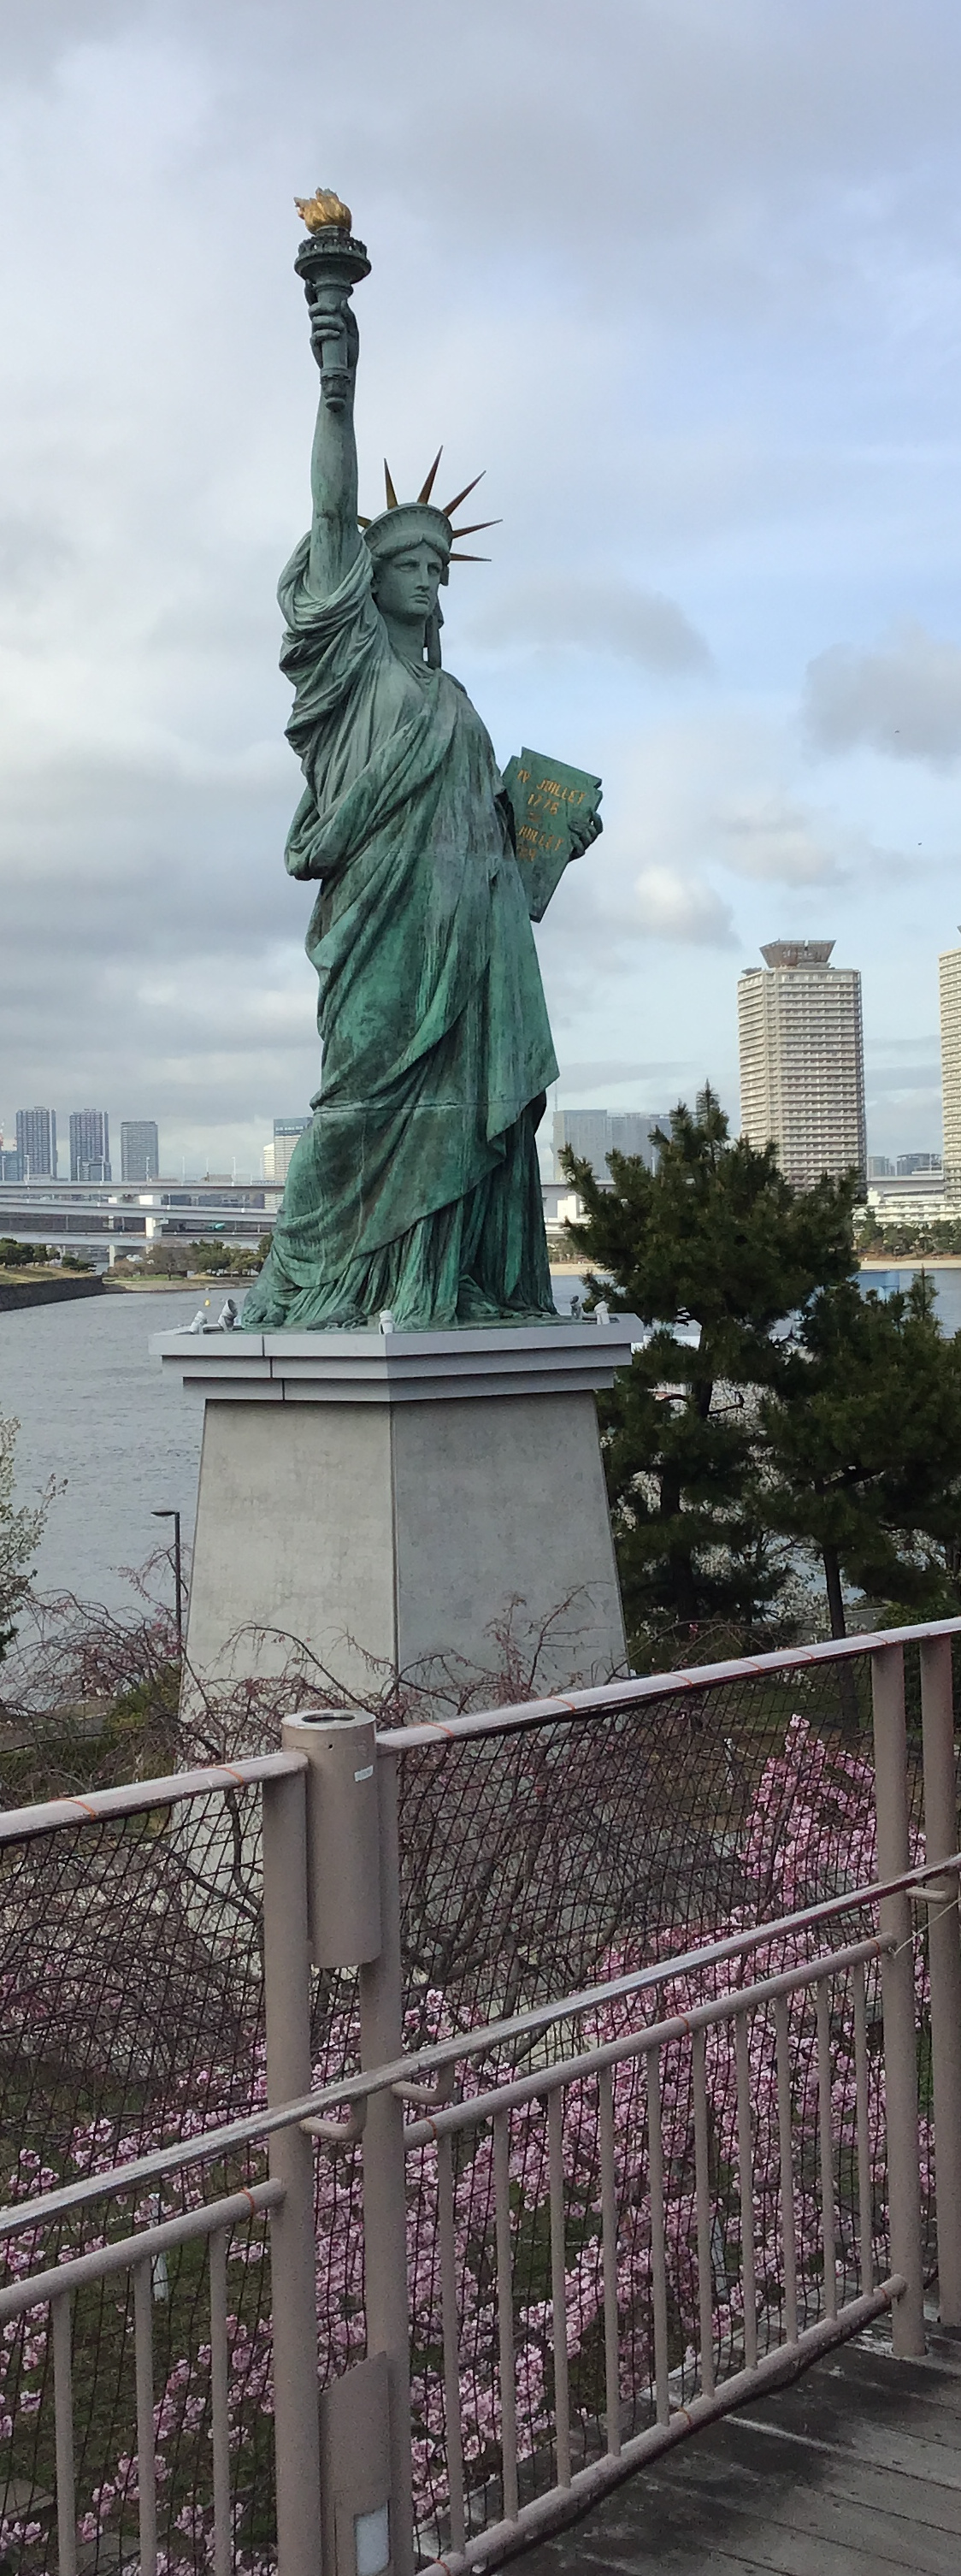 A Statue of Liberty replica in the park around Diver City